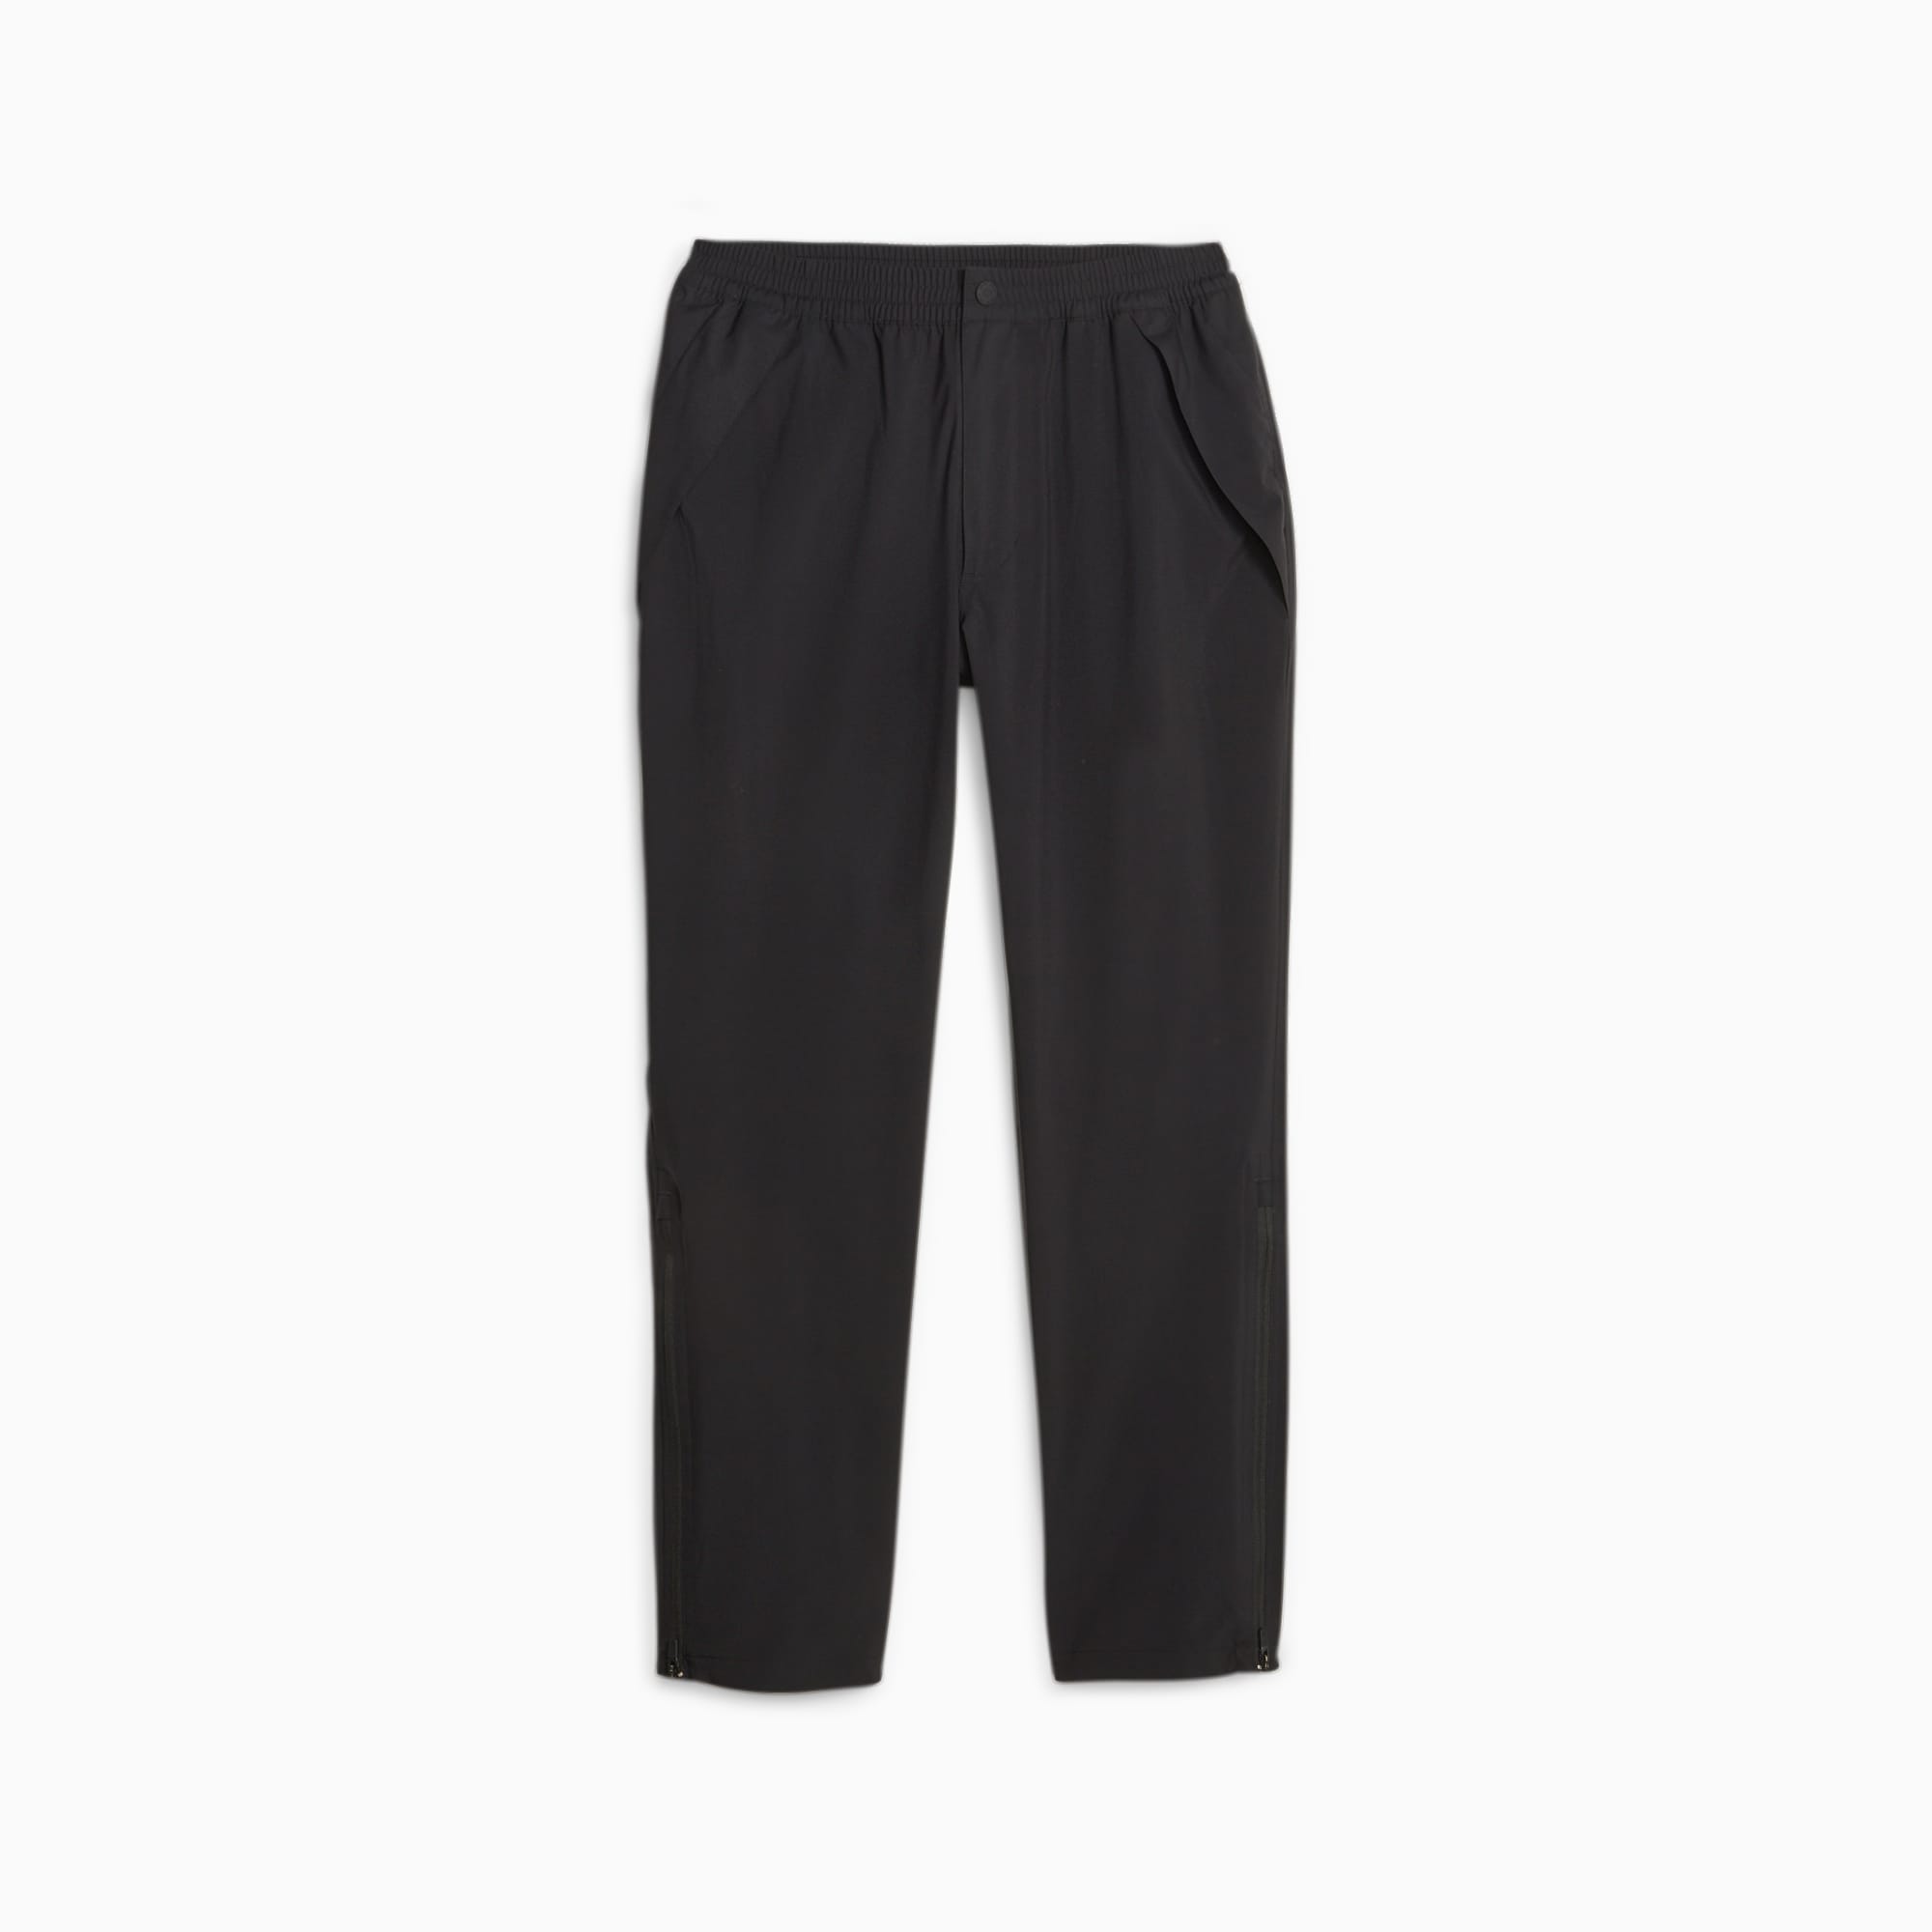 PUMA Drylbl Men's Rain Pants, Black, Size XS/L, Clothing